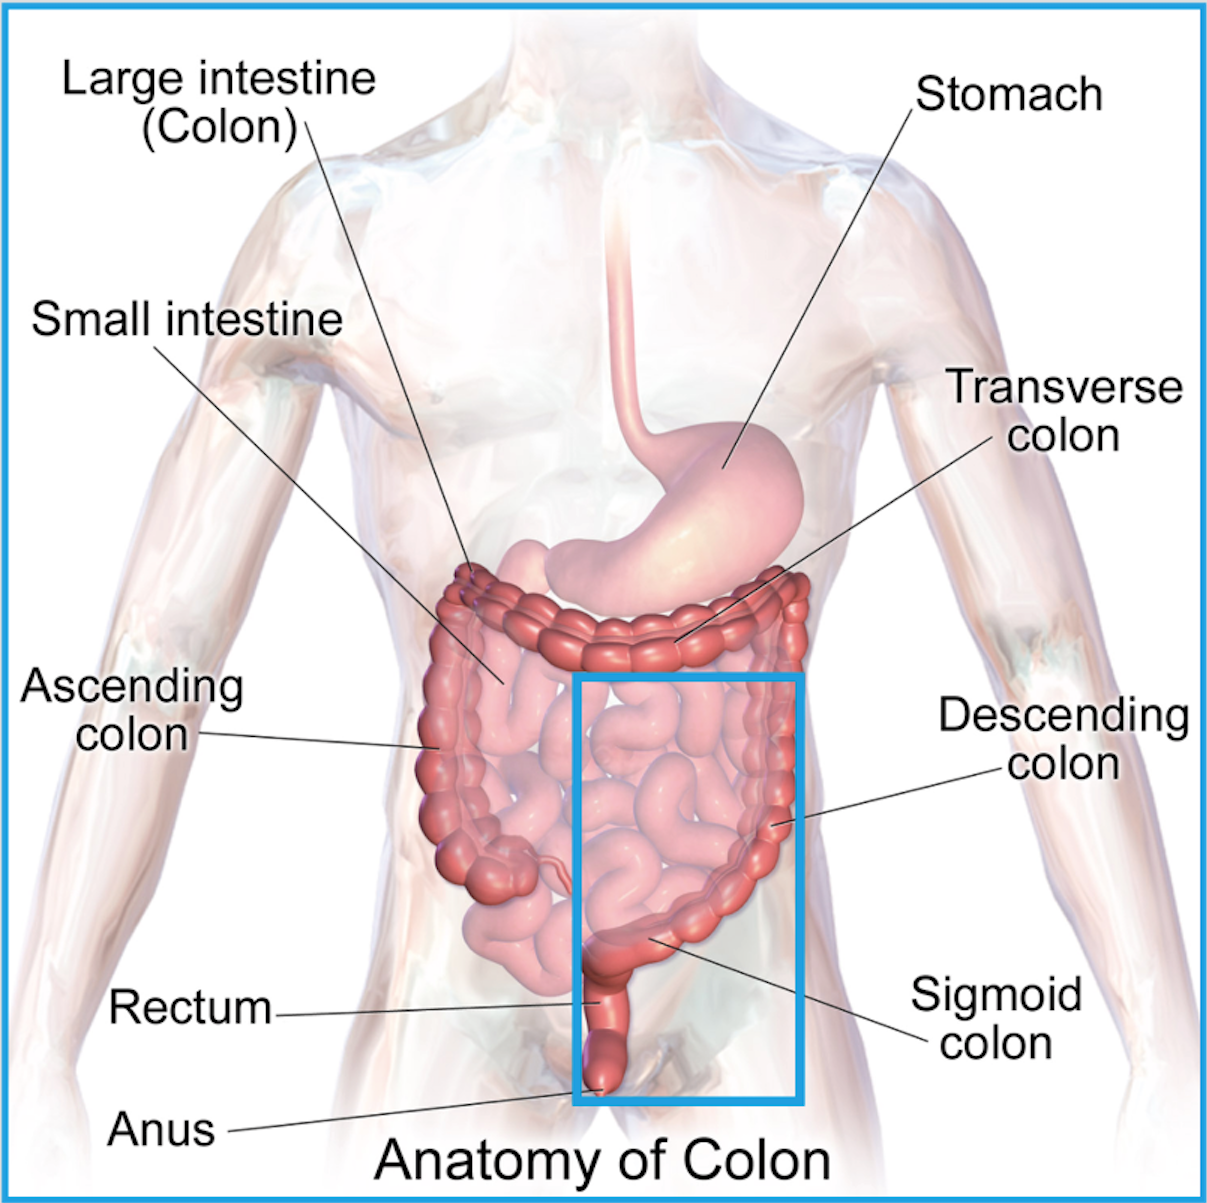 Anatomy of Colon